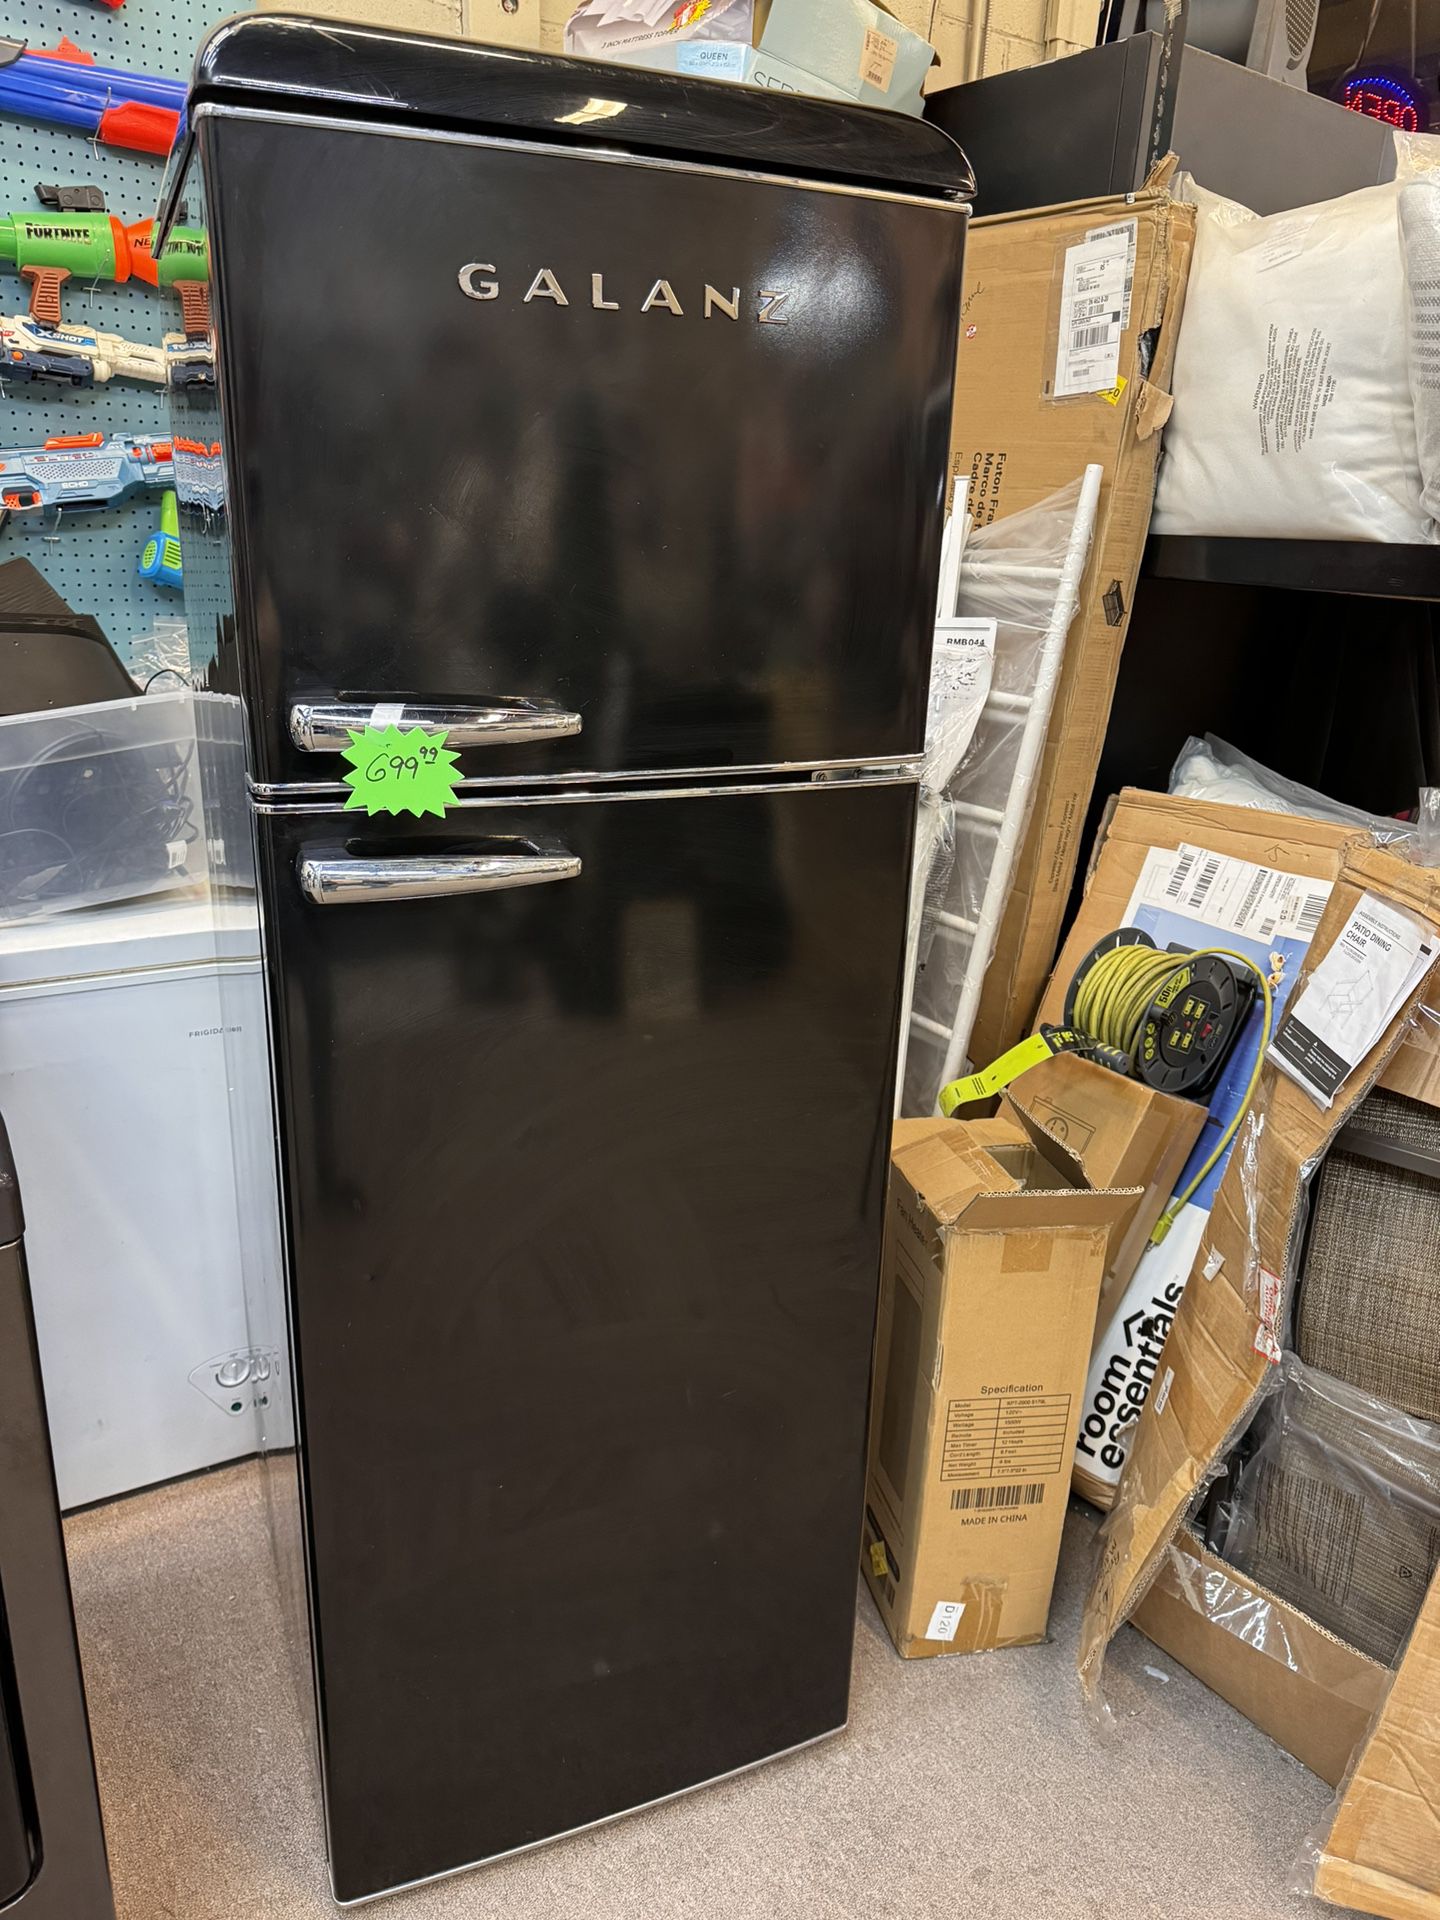 Galanz Fridge Freezer $699